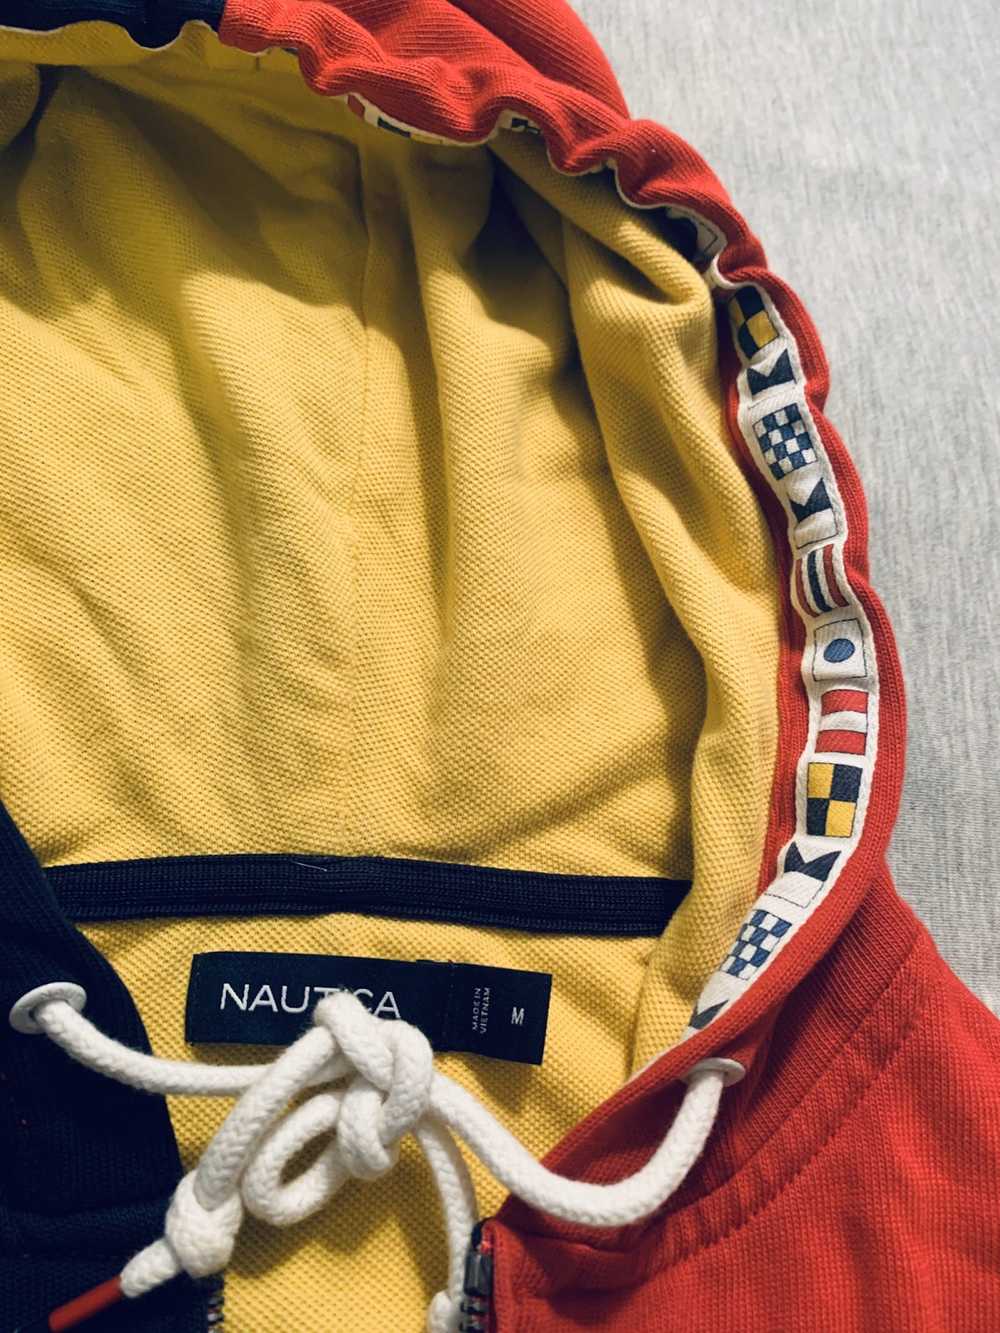 Nautica Nautica Sailing Gear Vintage Sweatshirt - image 2